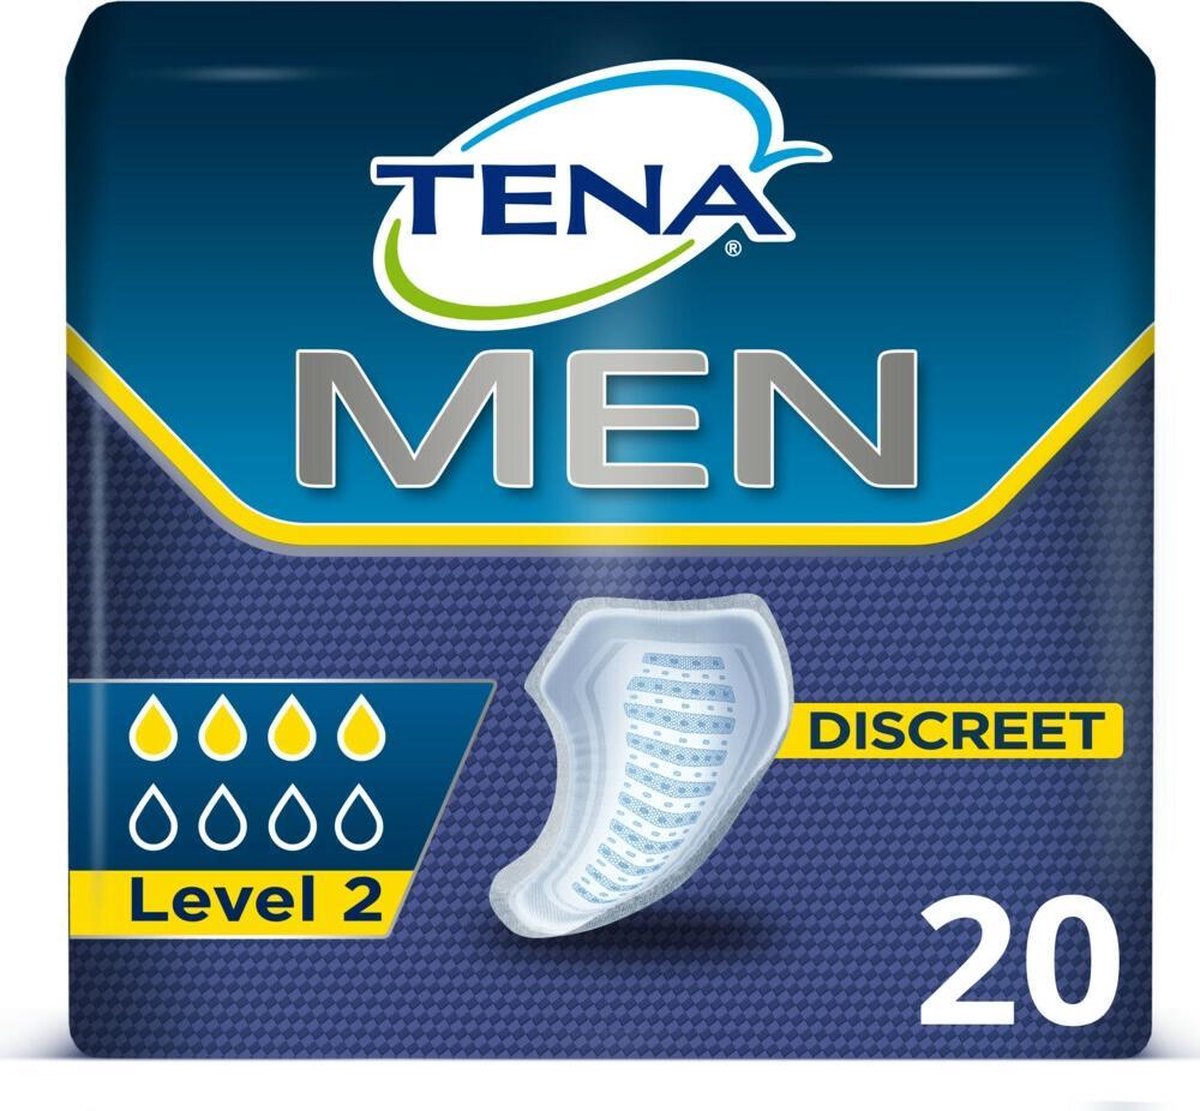 Tena Men Level 2 Incontinentie verband - 20 stuks - TENA